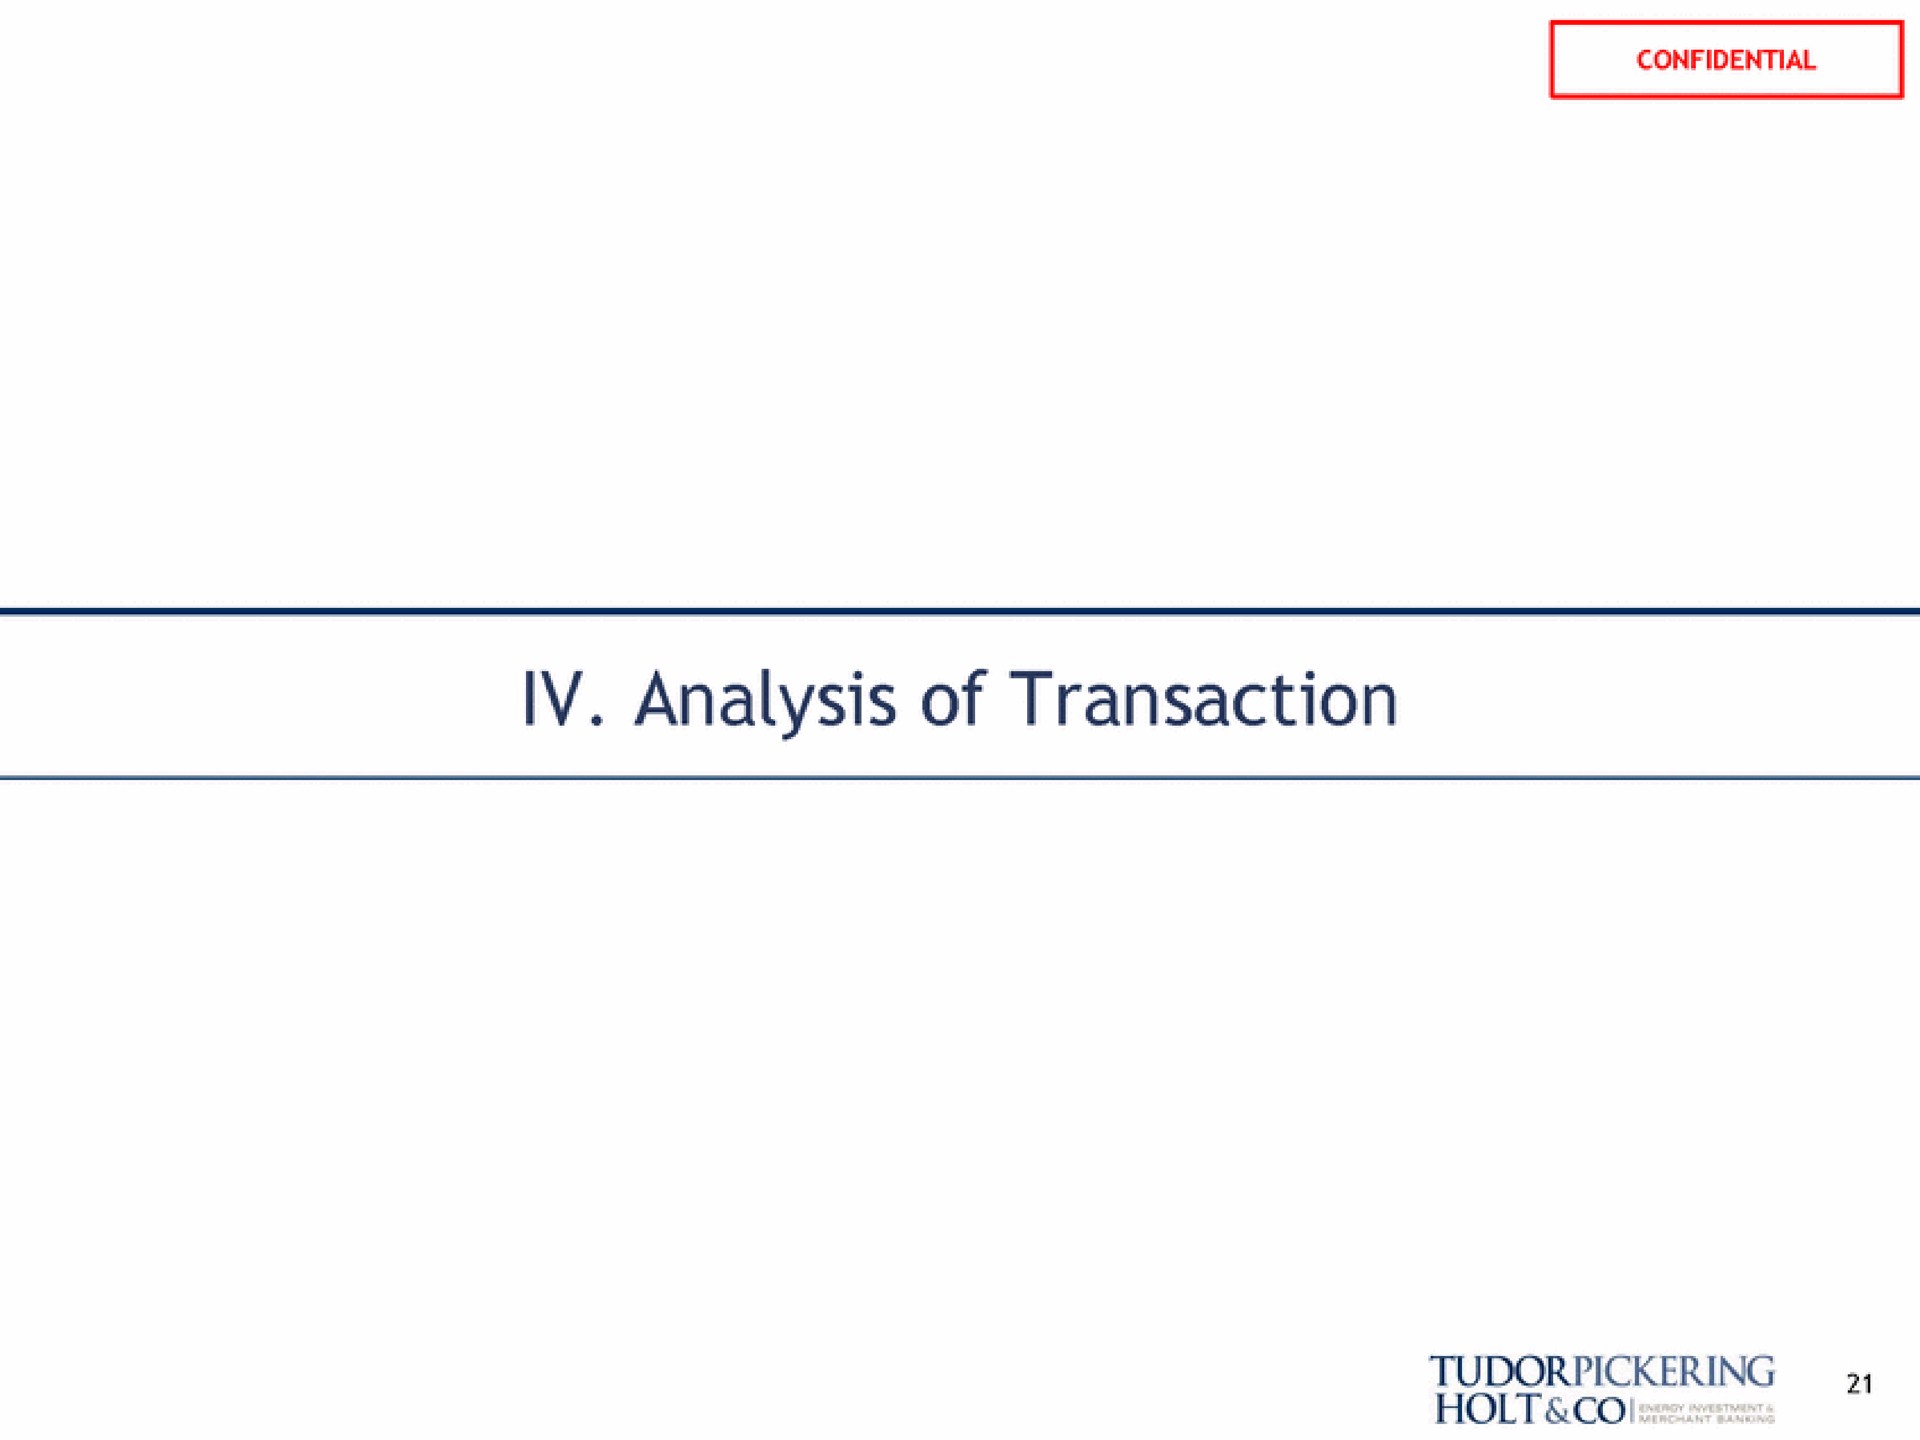 analysis of transaction bolt ego sea | Tudor, Pickering, Holt & Co